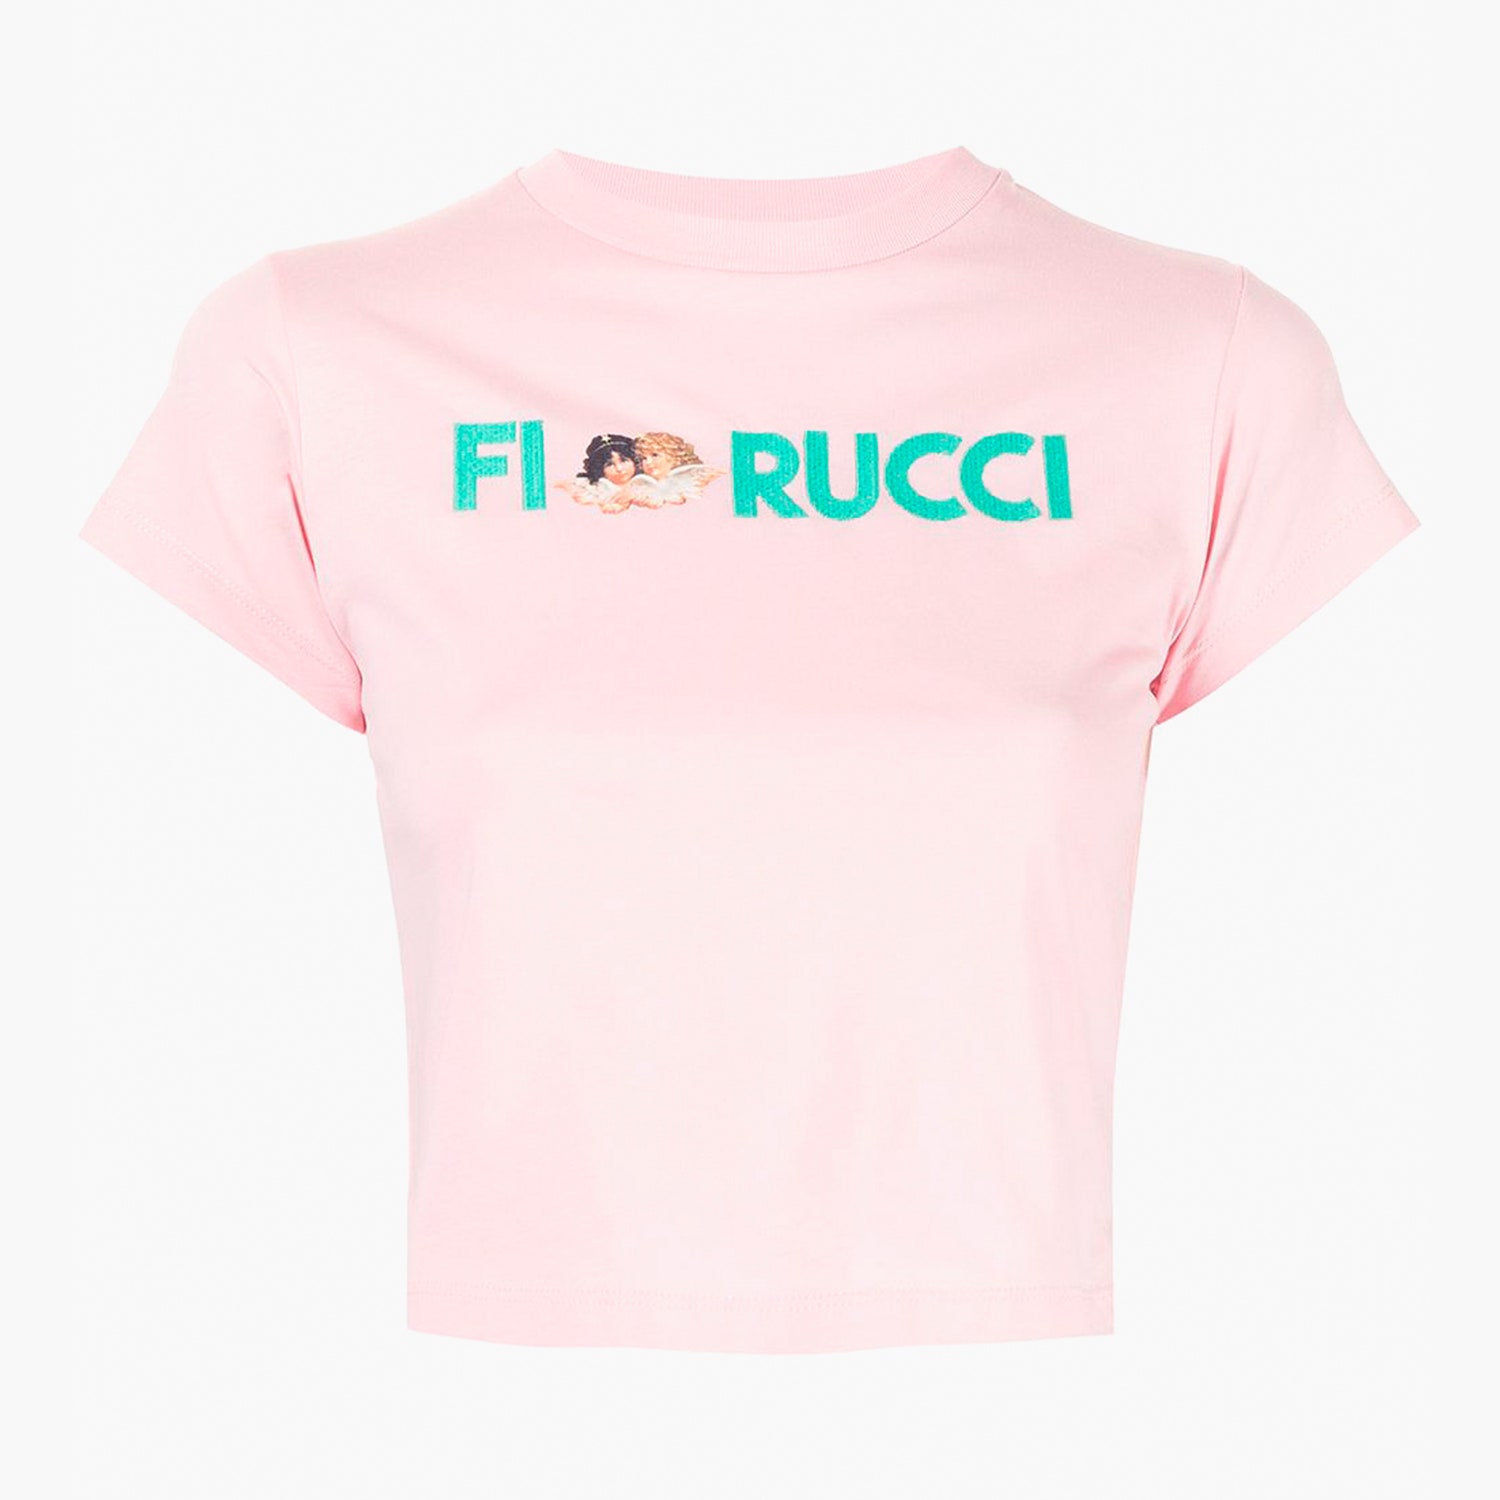 Fiorucci 7258 рублей farfetch.com